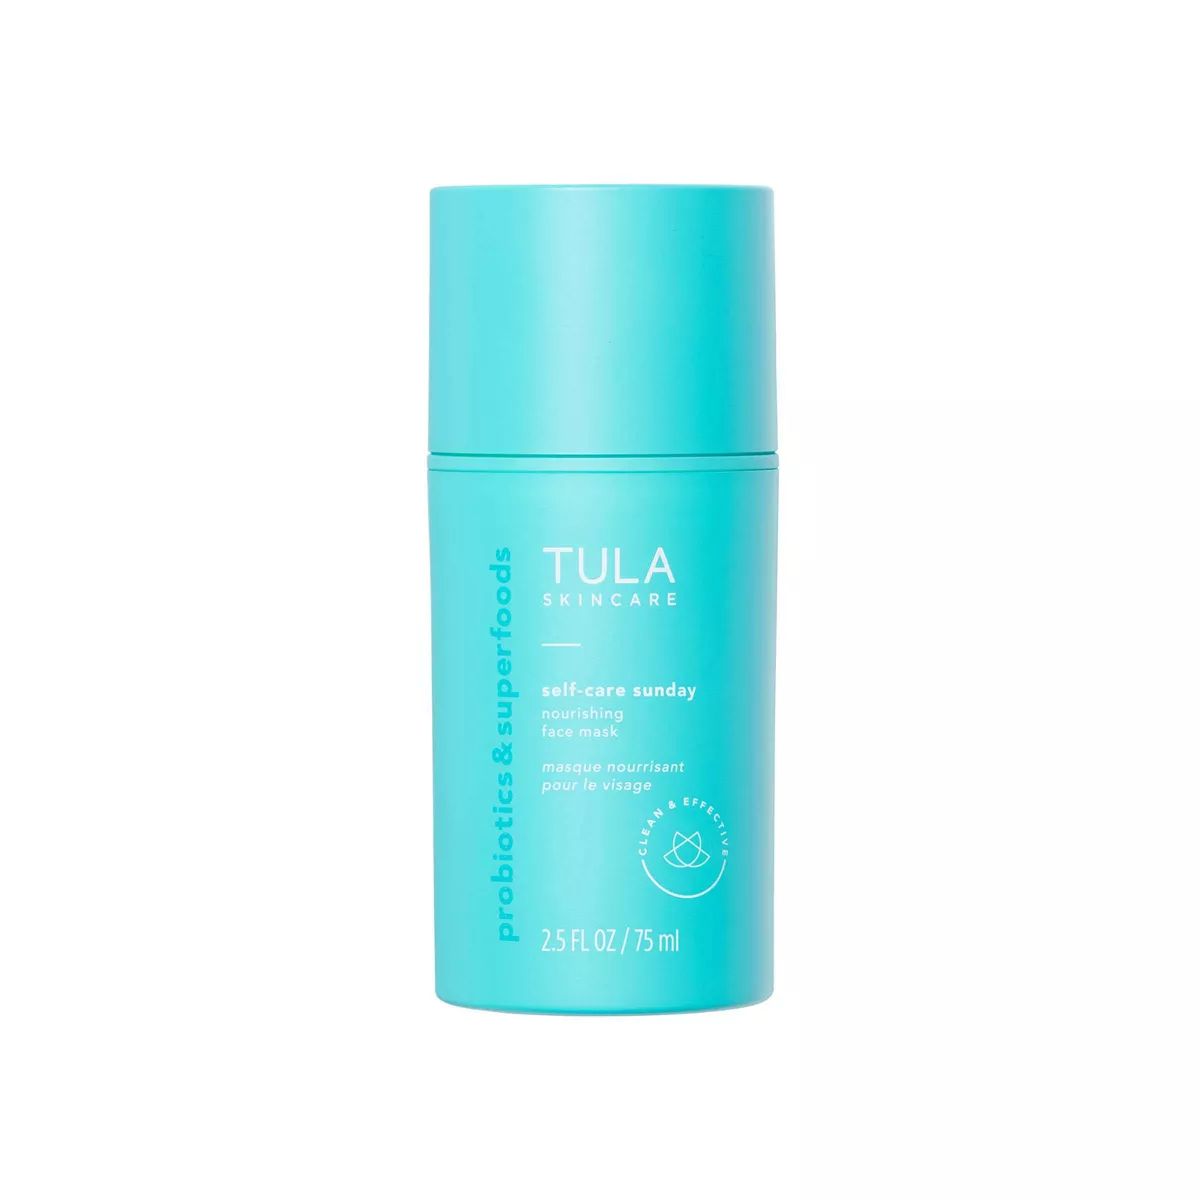 TULA SKINCARE Self-Care Sunday Nourishing Face Mask - 2.5 fl oz - Ulta Beauty | Target